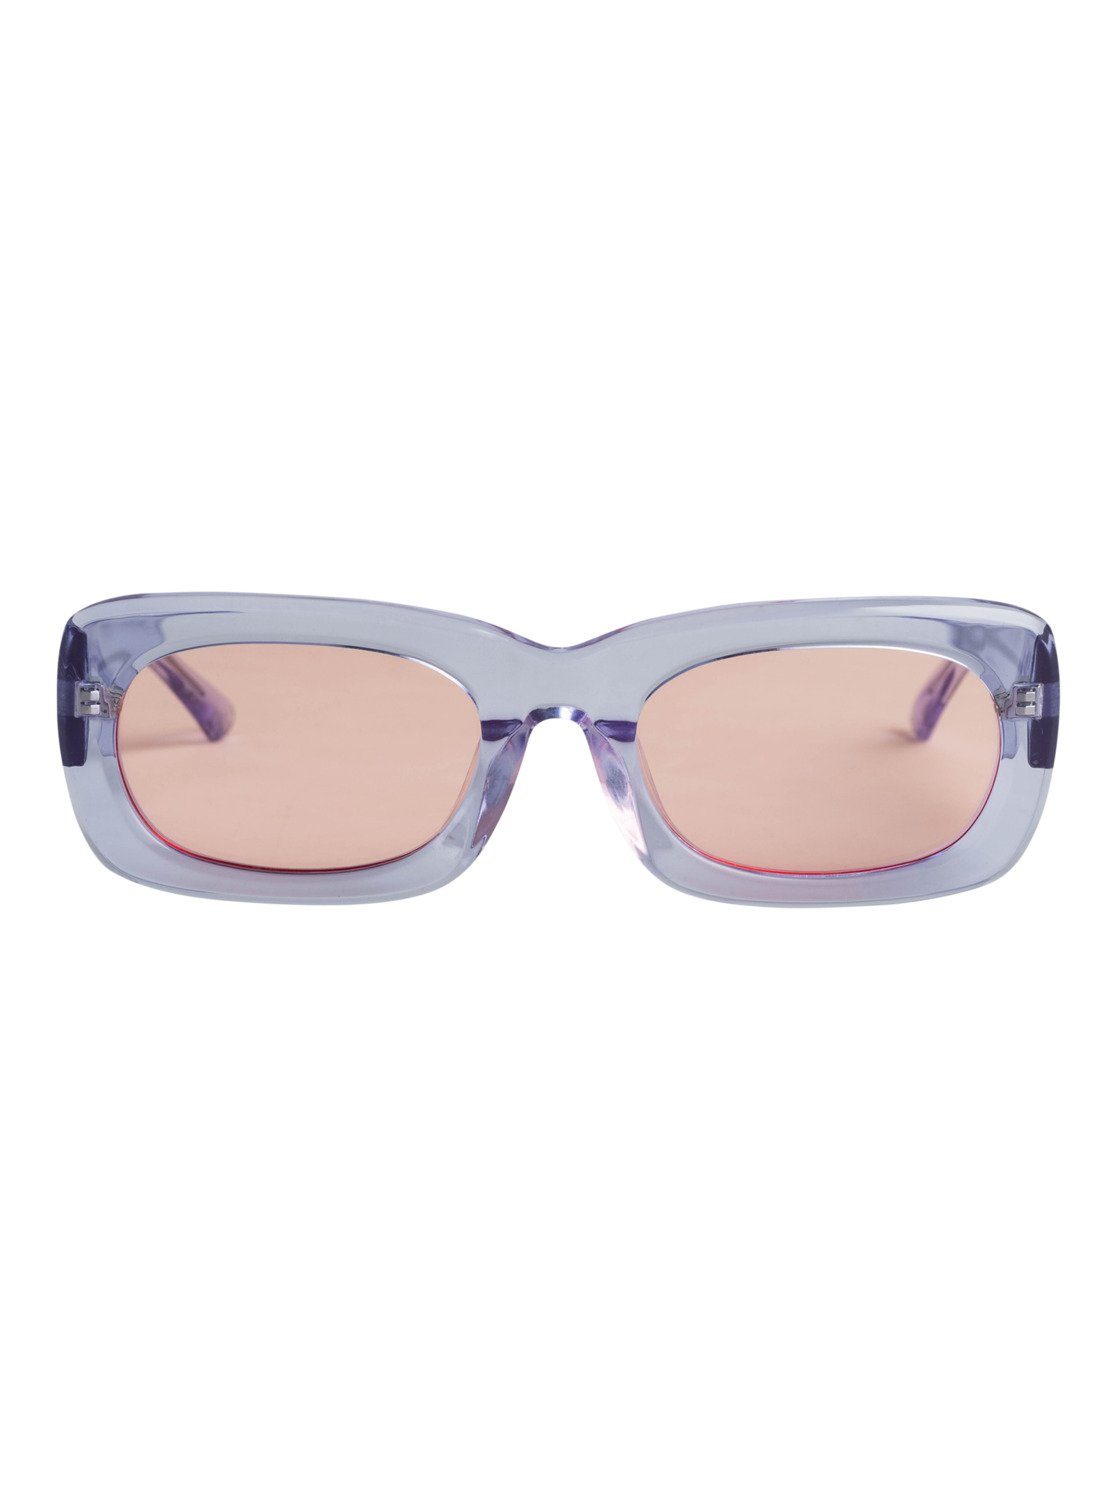 Sonnenbrille Roxy Faye Purple/Coral